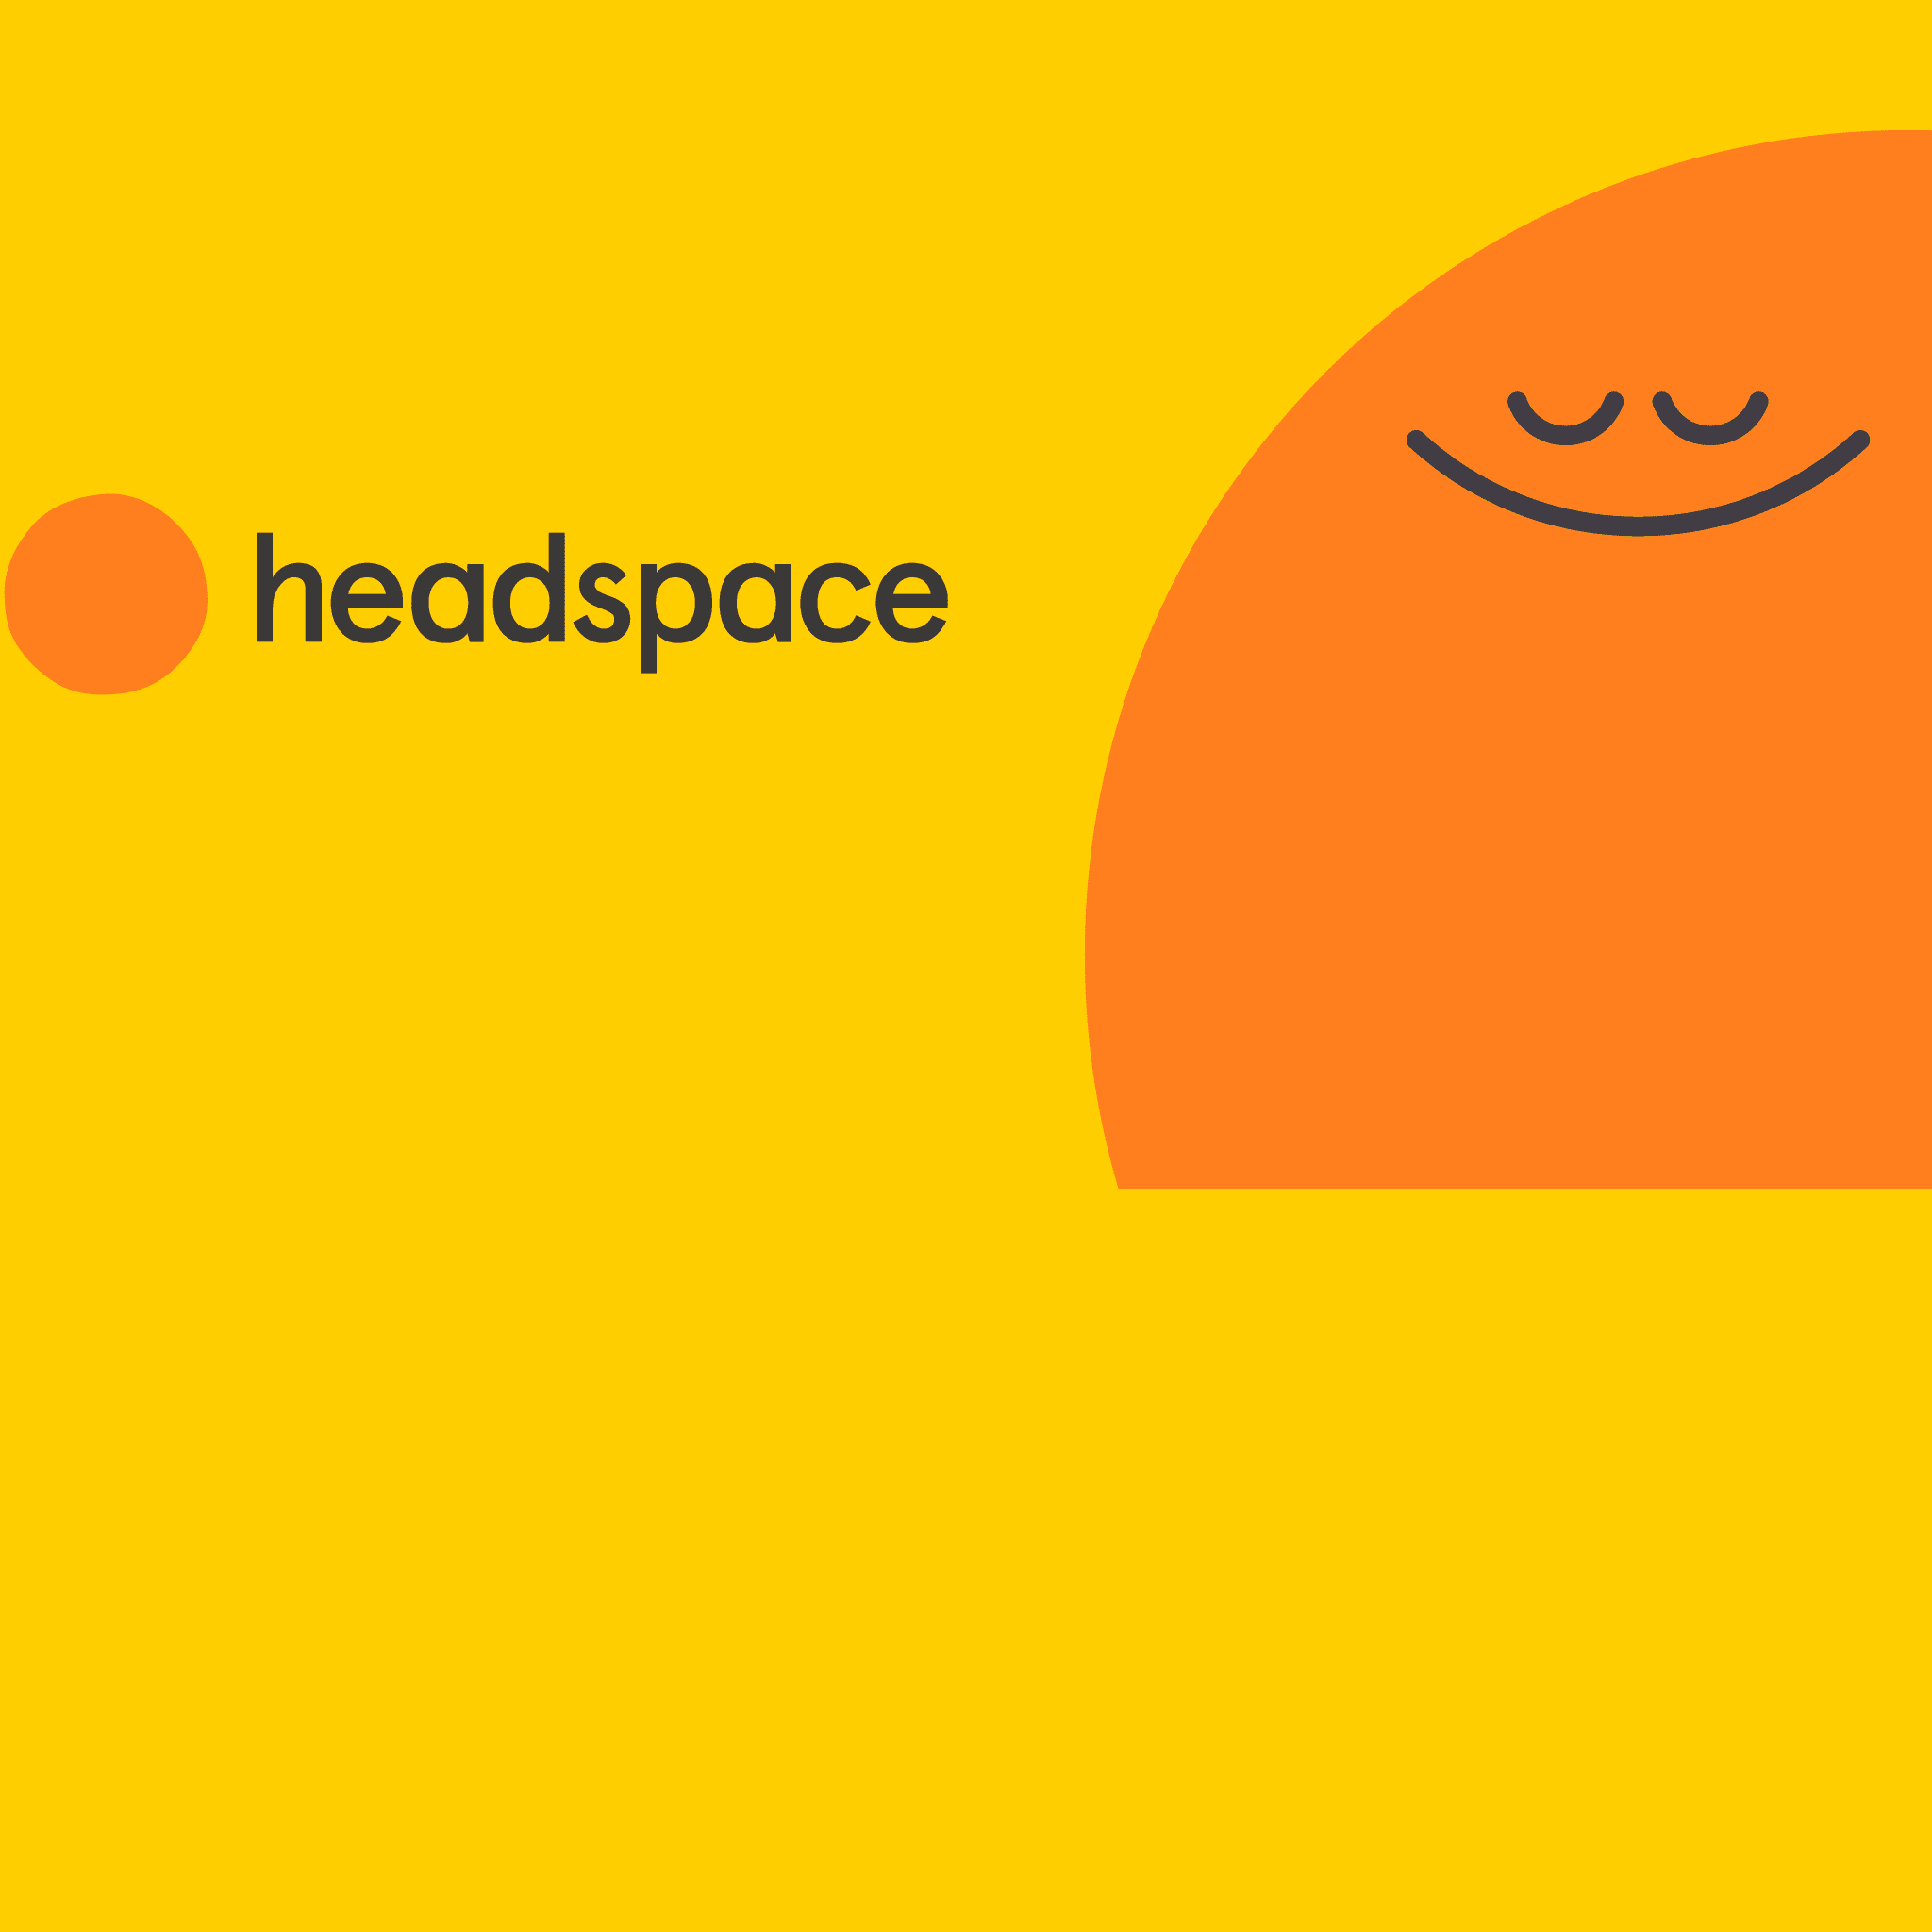 www.headspace.com